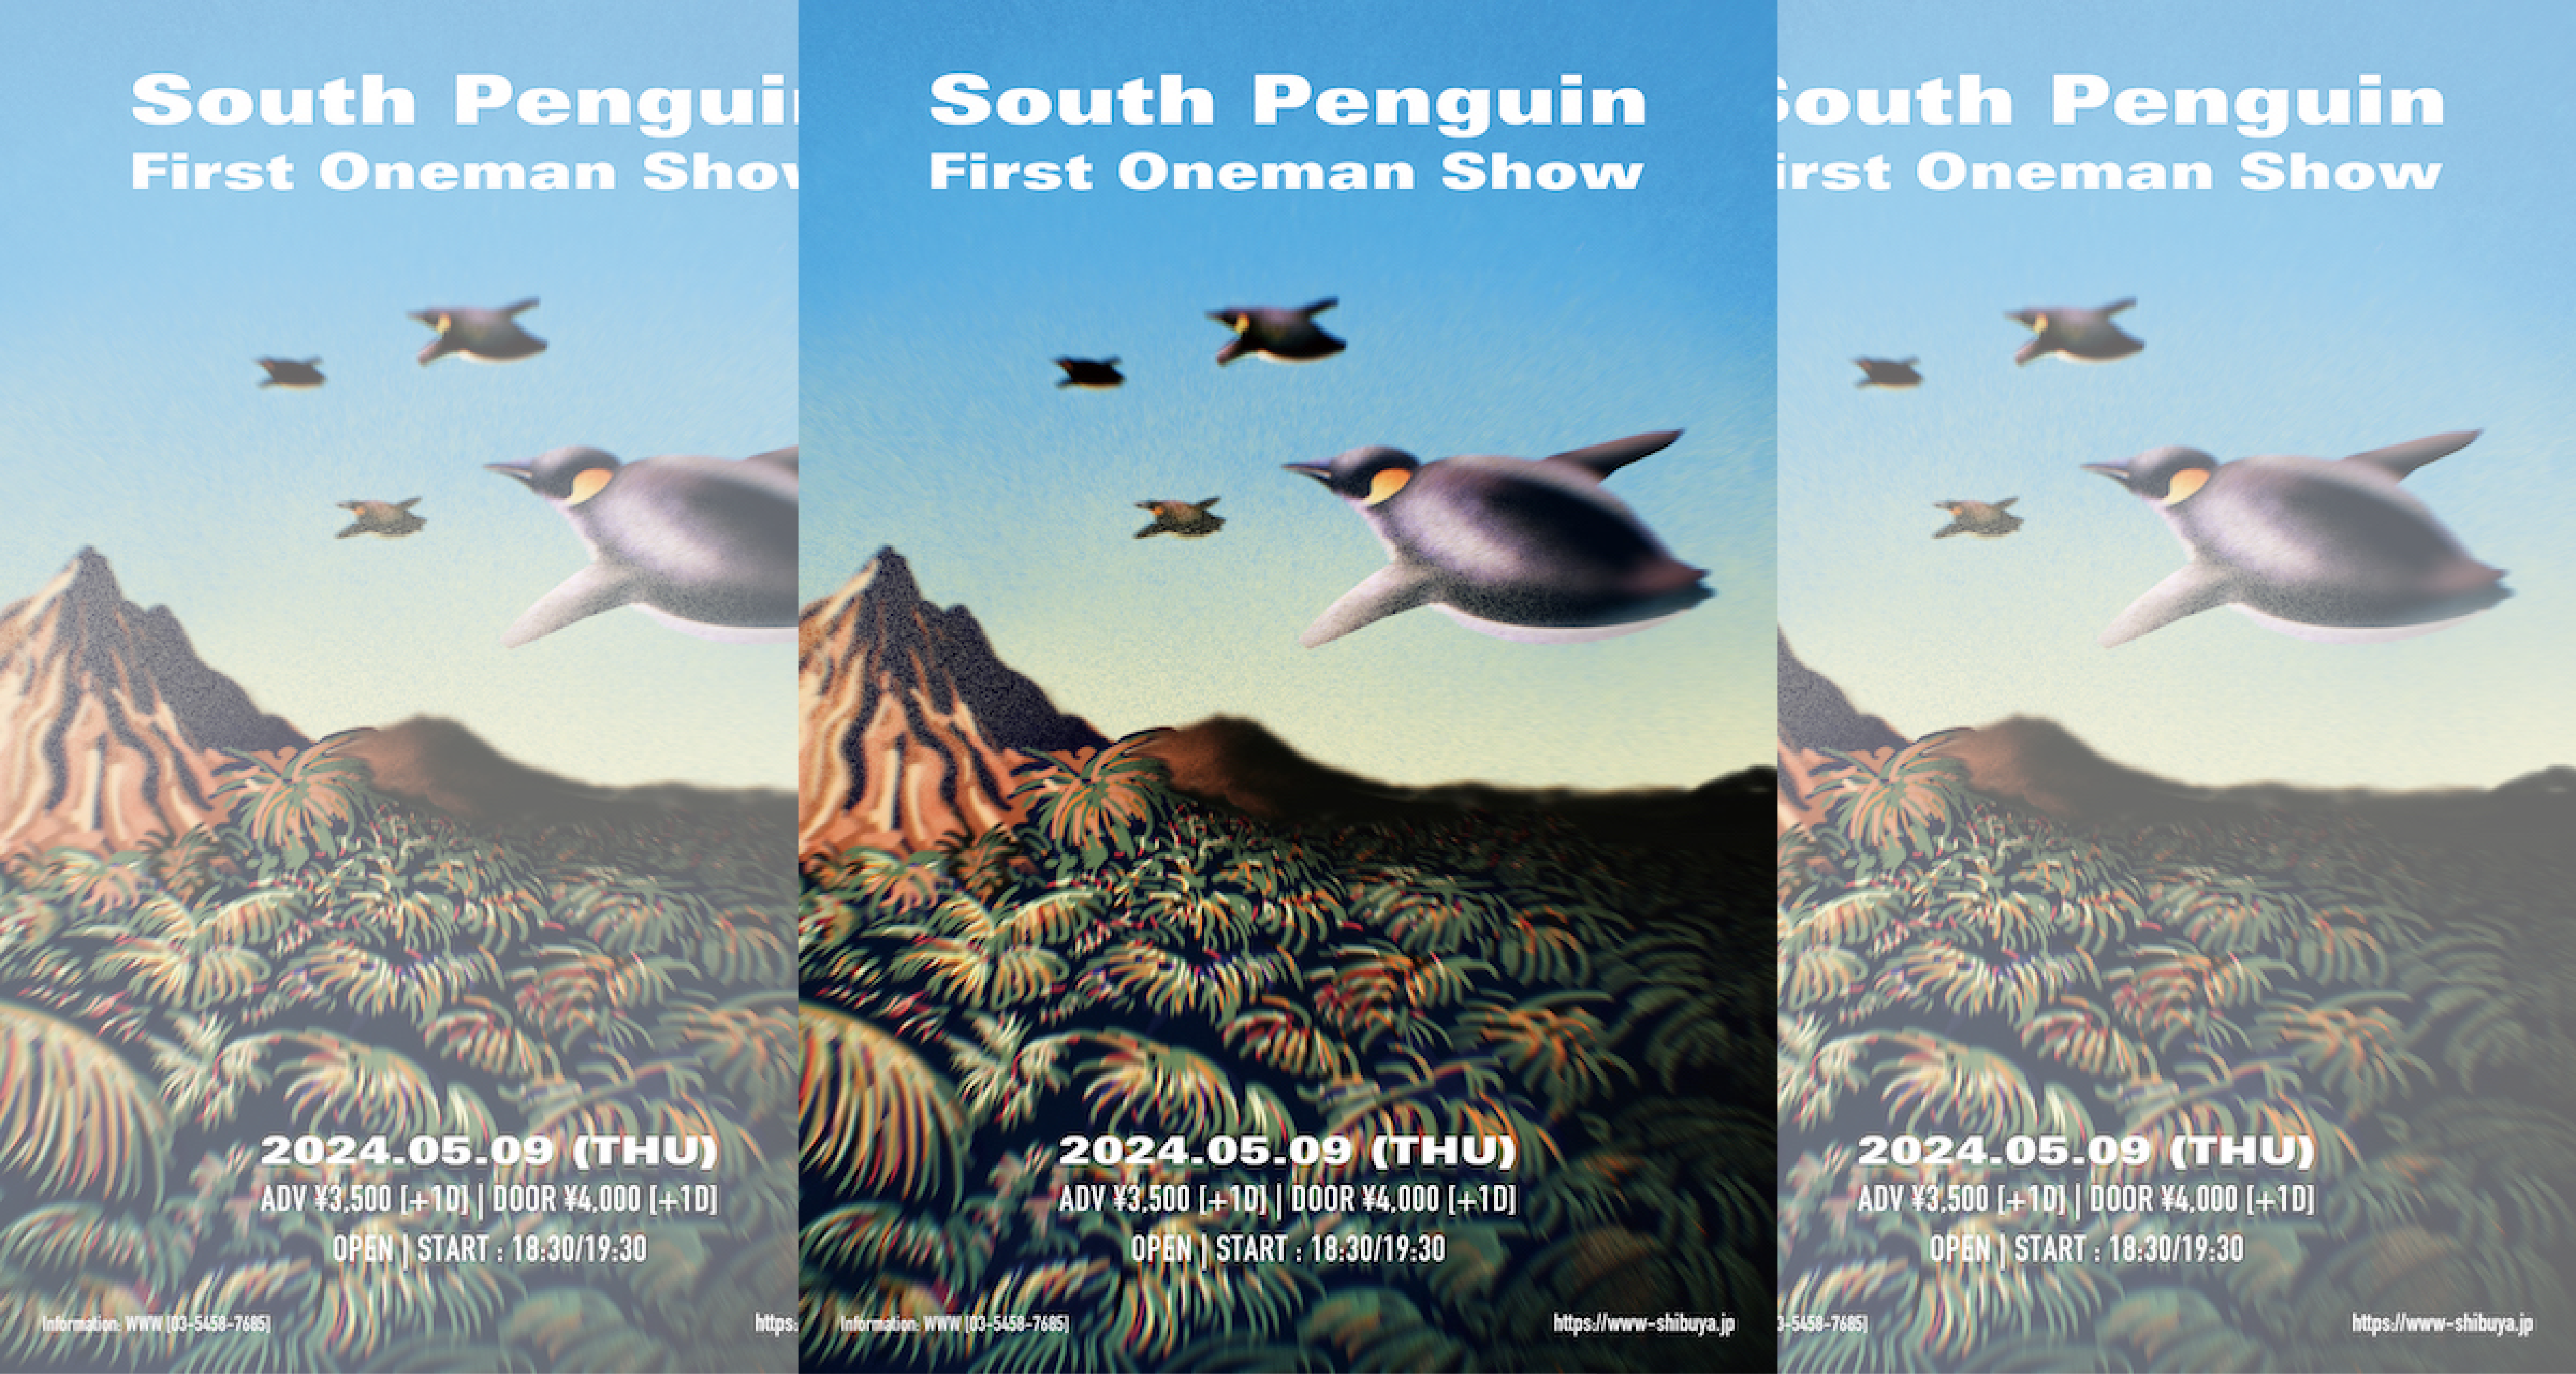 South Penguin